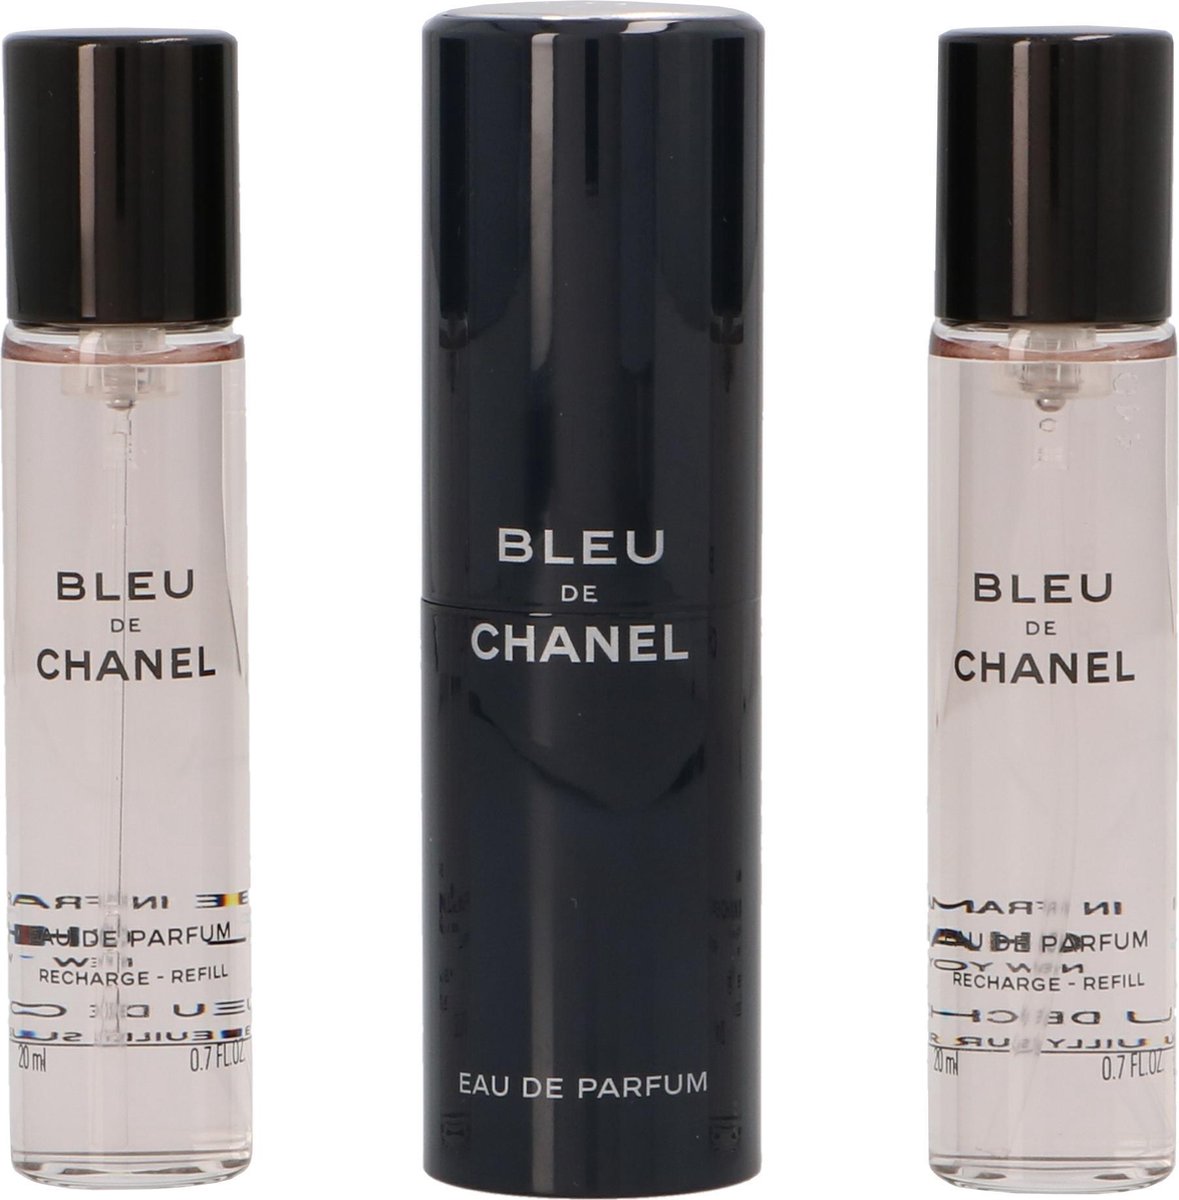 CHANEL (BLEU DE CHANEL) Parfum Twist And Spray Travel Set (3 x 20ml) |  Harrods US